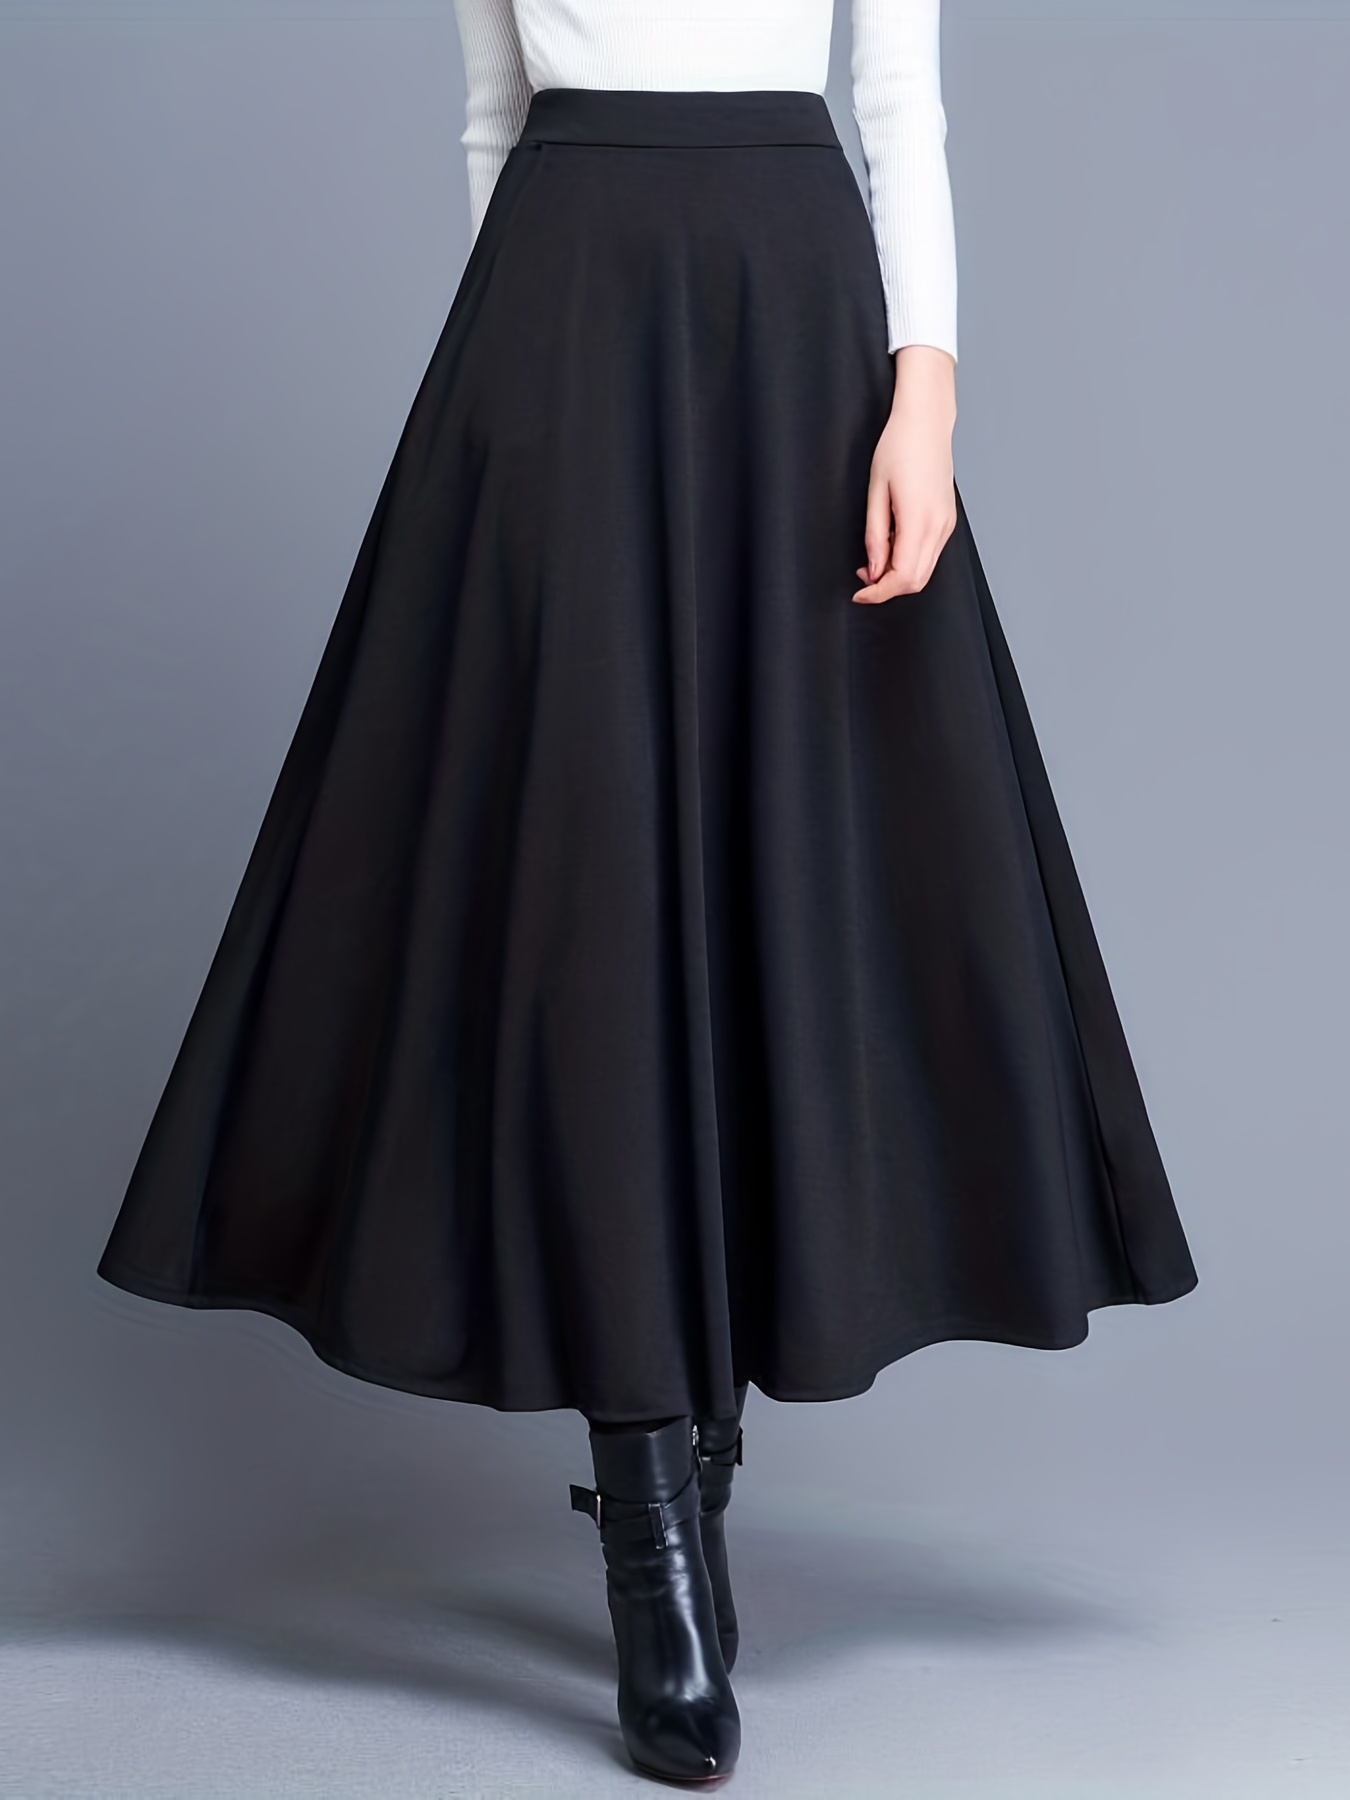 Falda larga negra/Falda suelta asimétrica/Falda larga/Falda